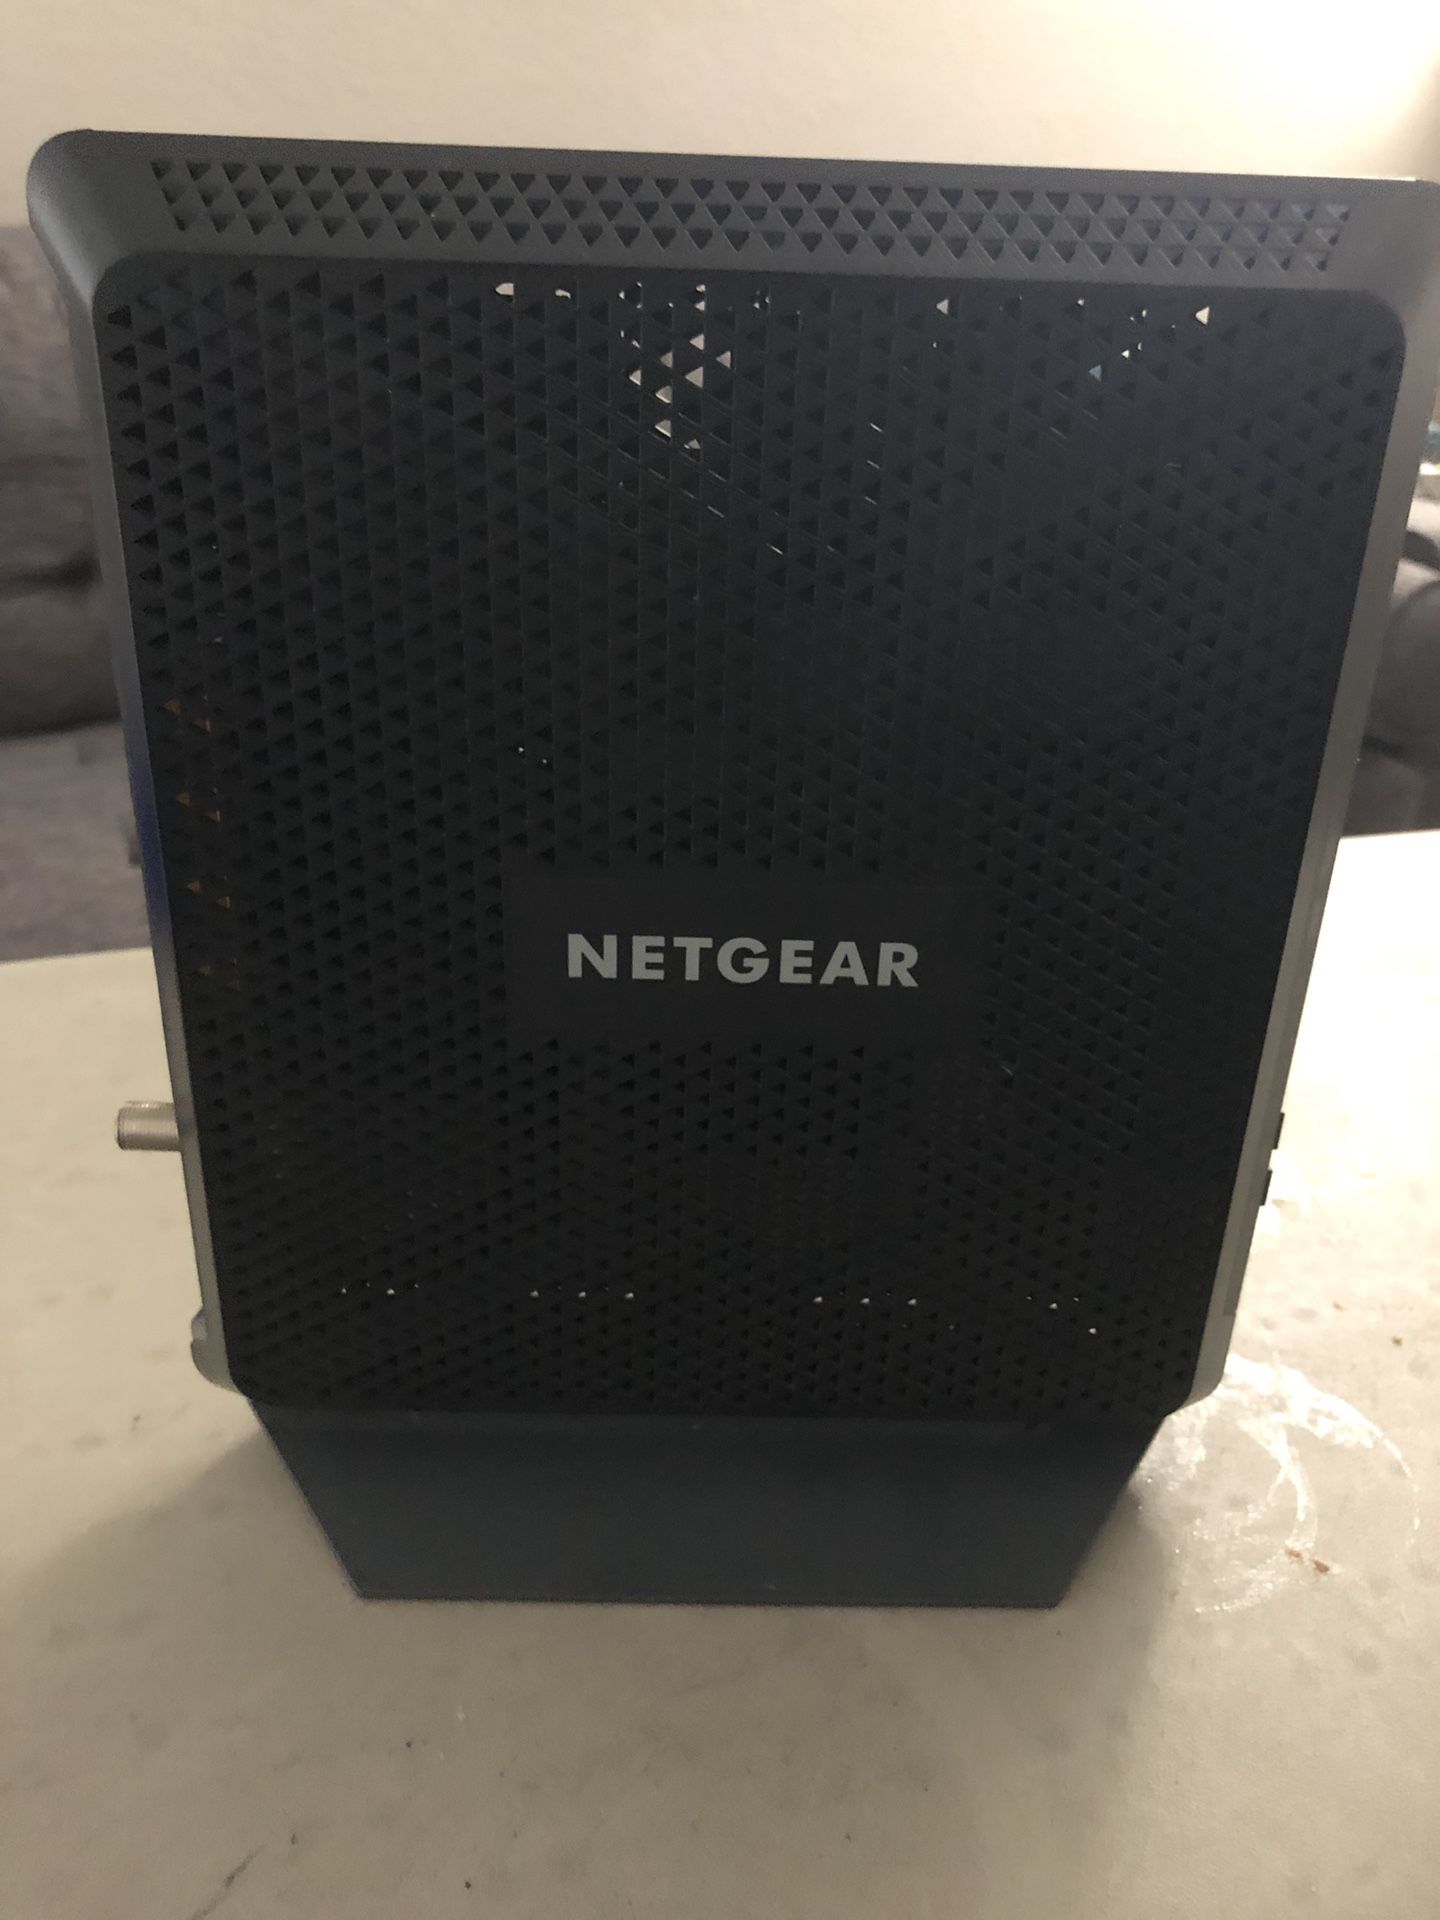 Netgear Nighthawk Dual Band AC1900 Cable Modem Router